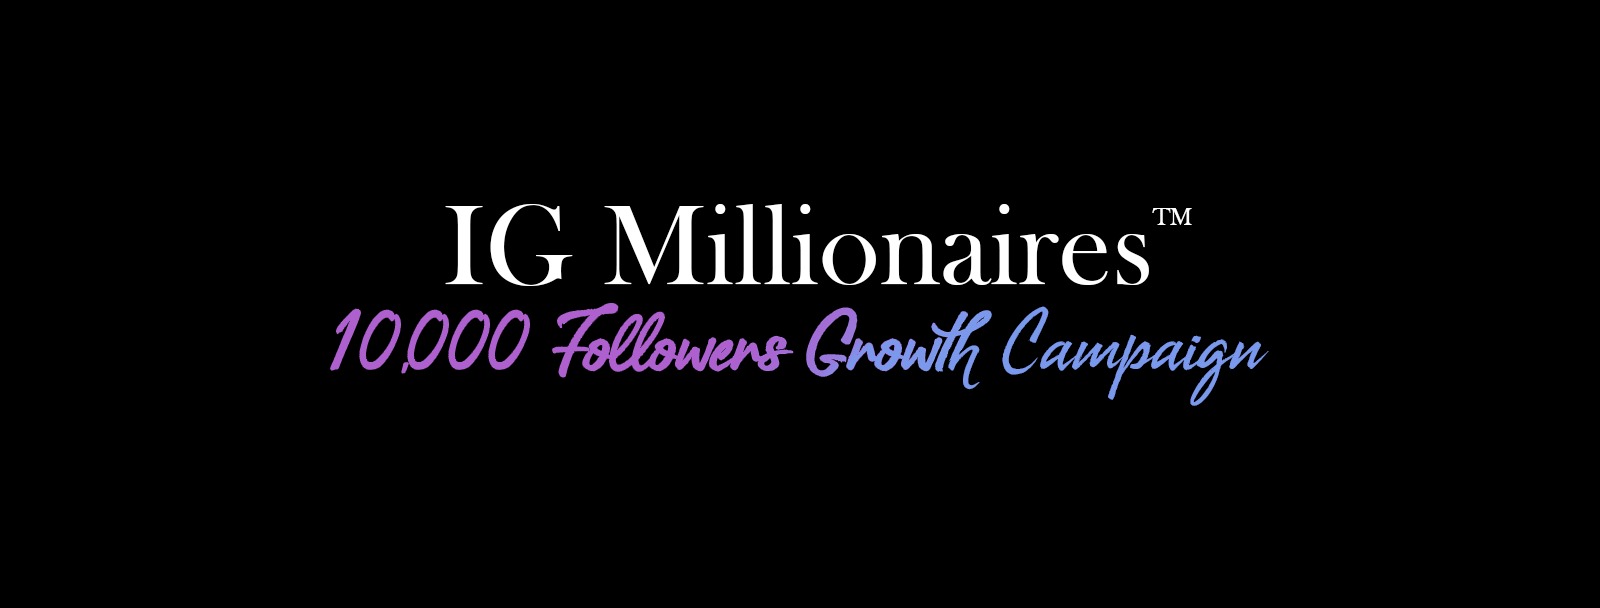 IG Millionaires - 10,000 Follower Growth Campaign